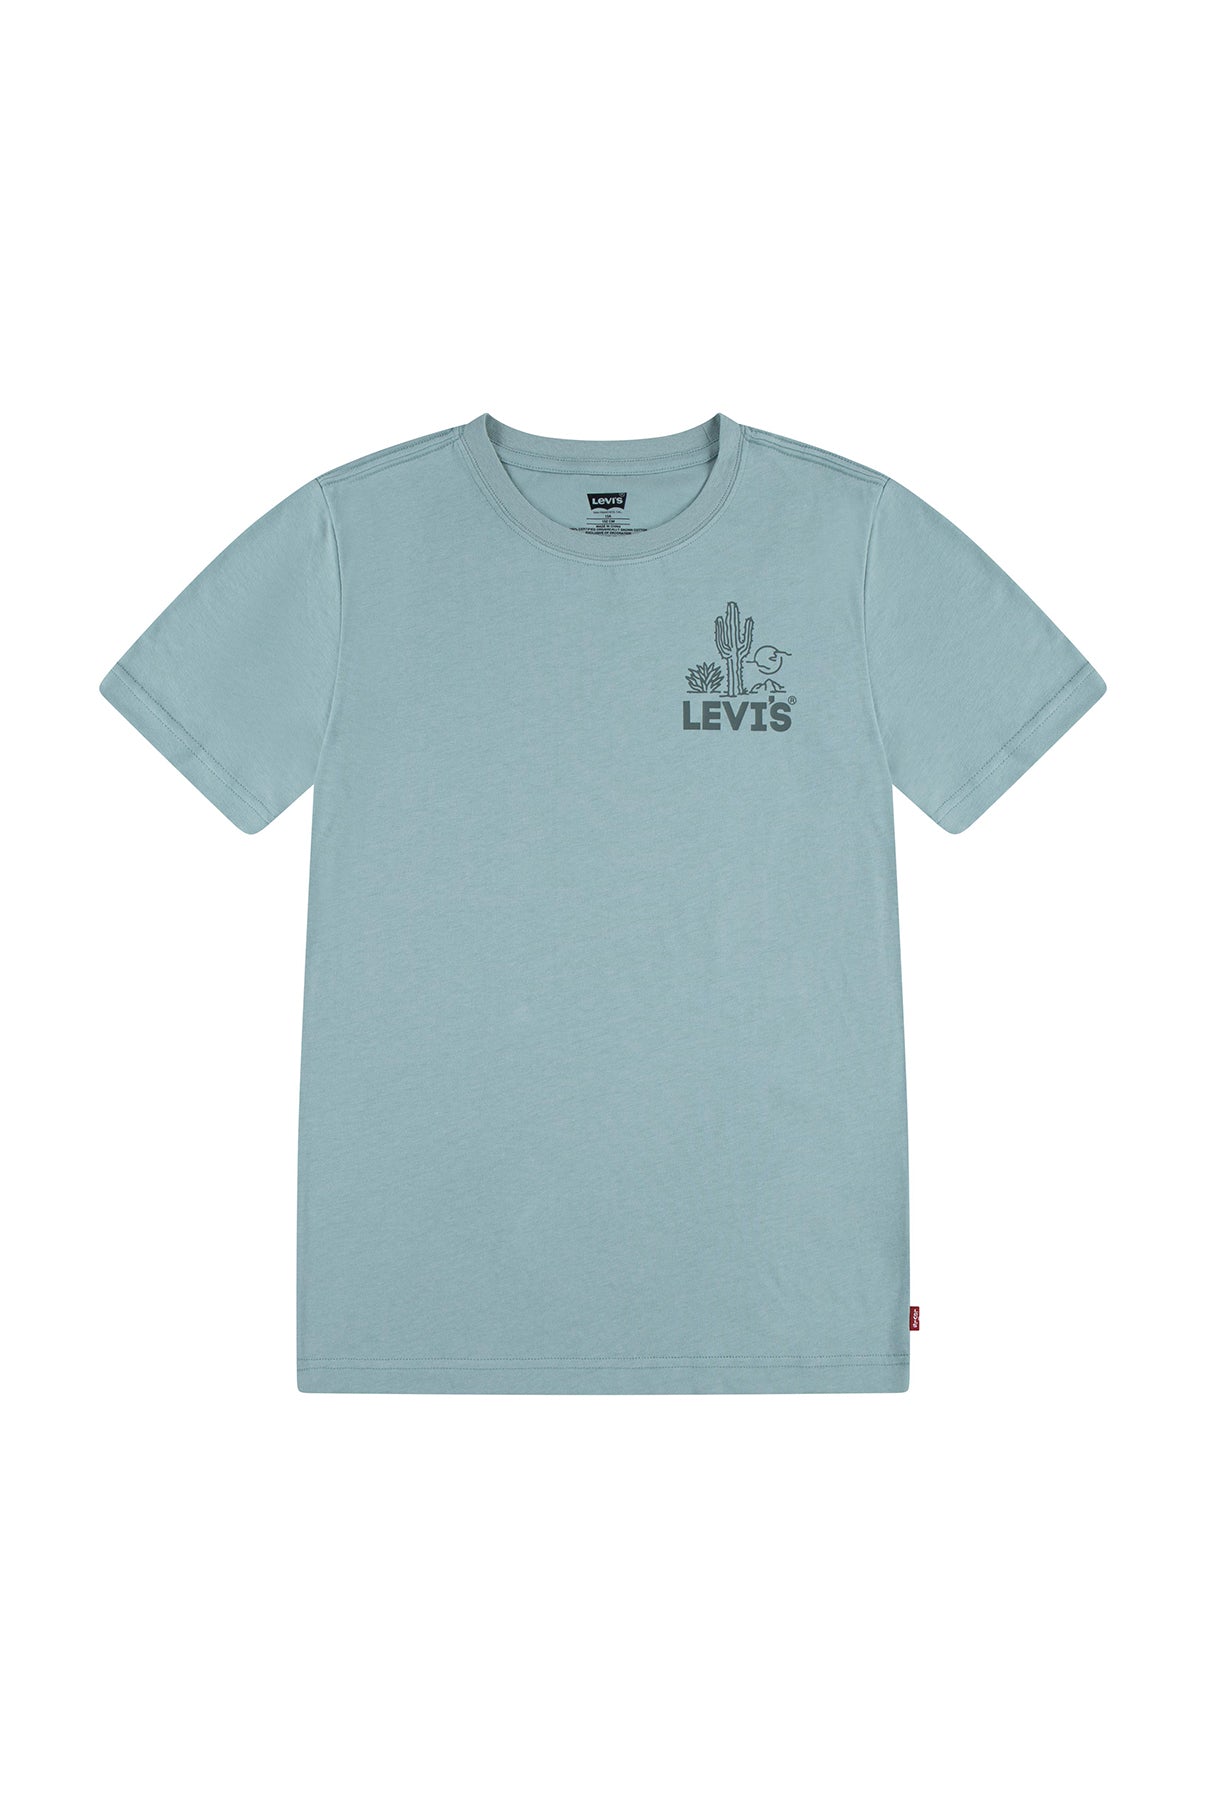 LEVIS BOY T-shirt Cacti Club